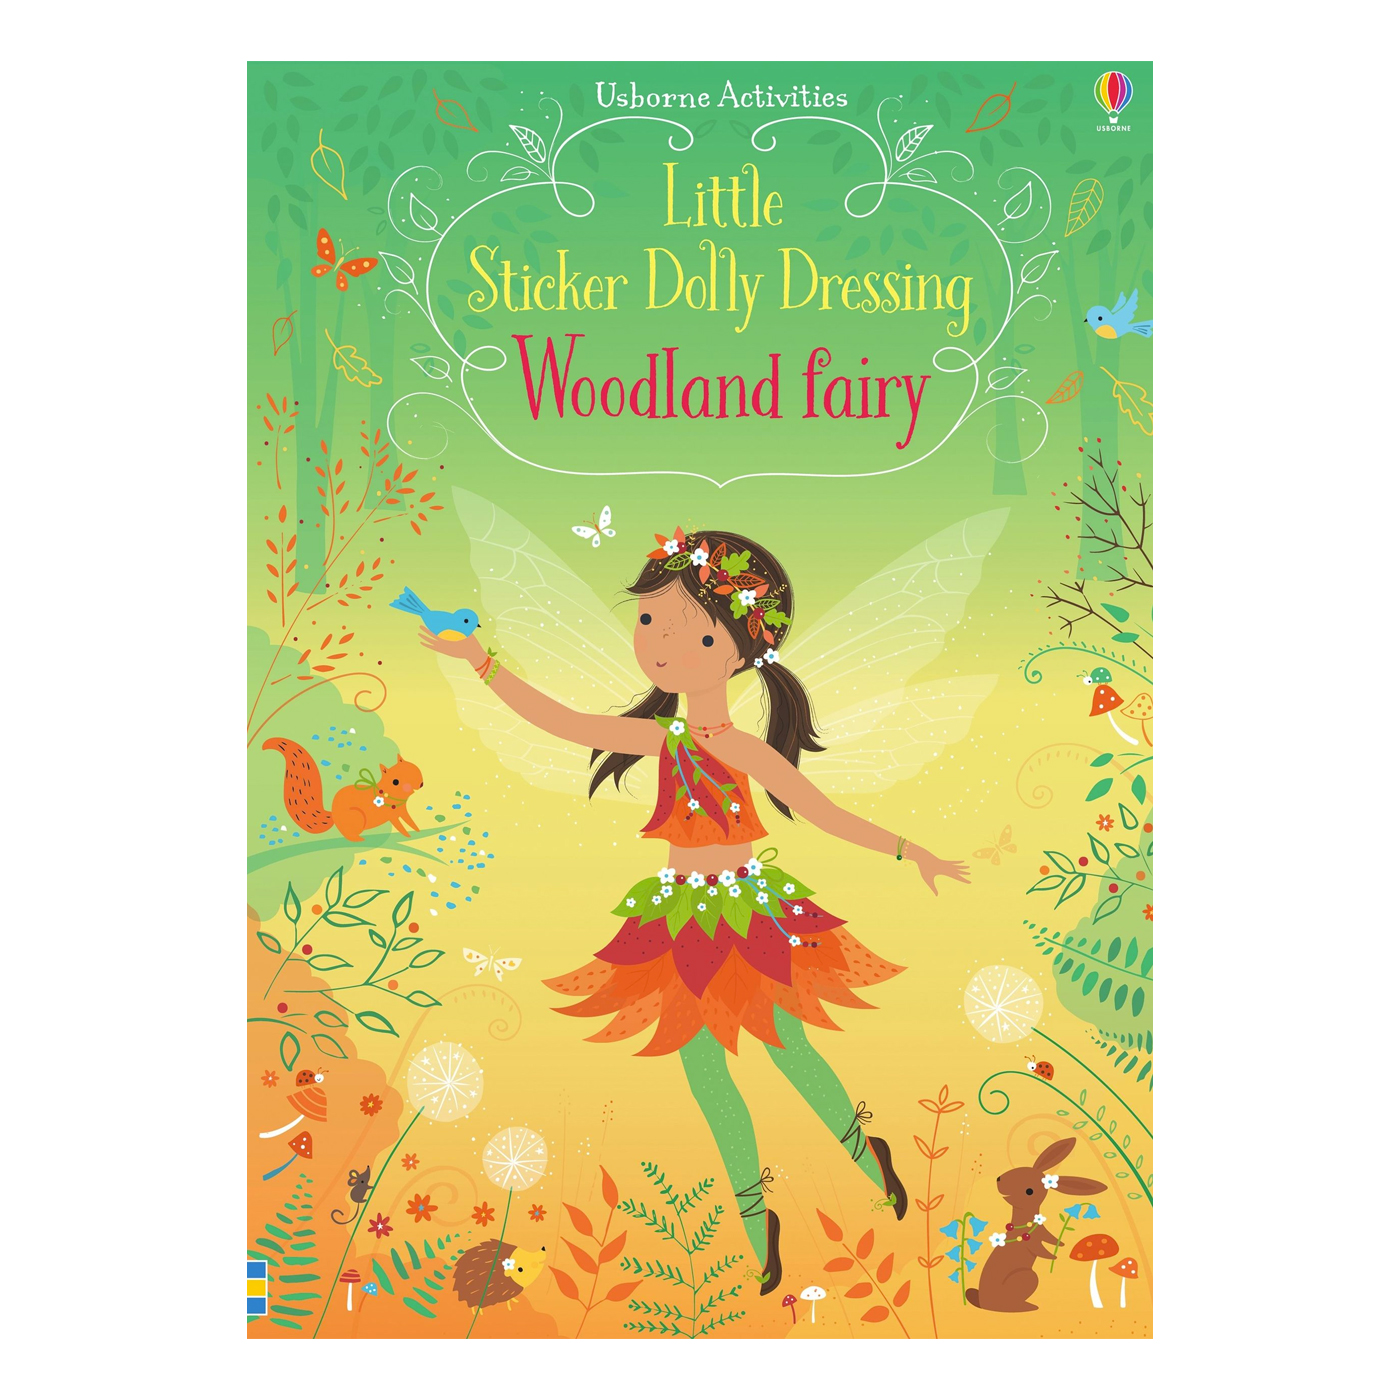  Little Sticker Dolly Dressing Woodland Fairy